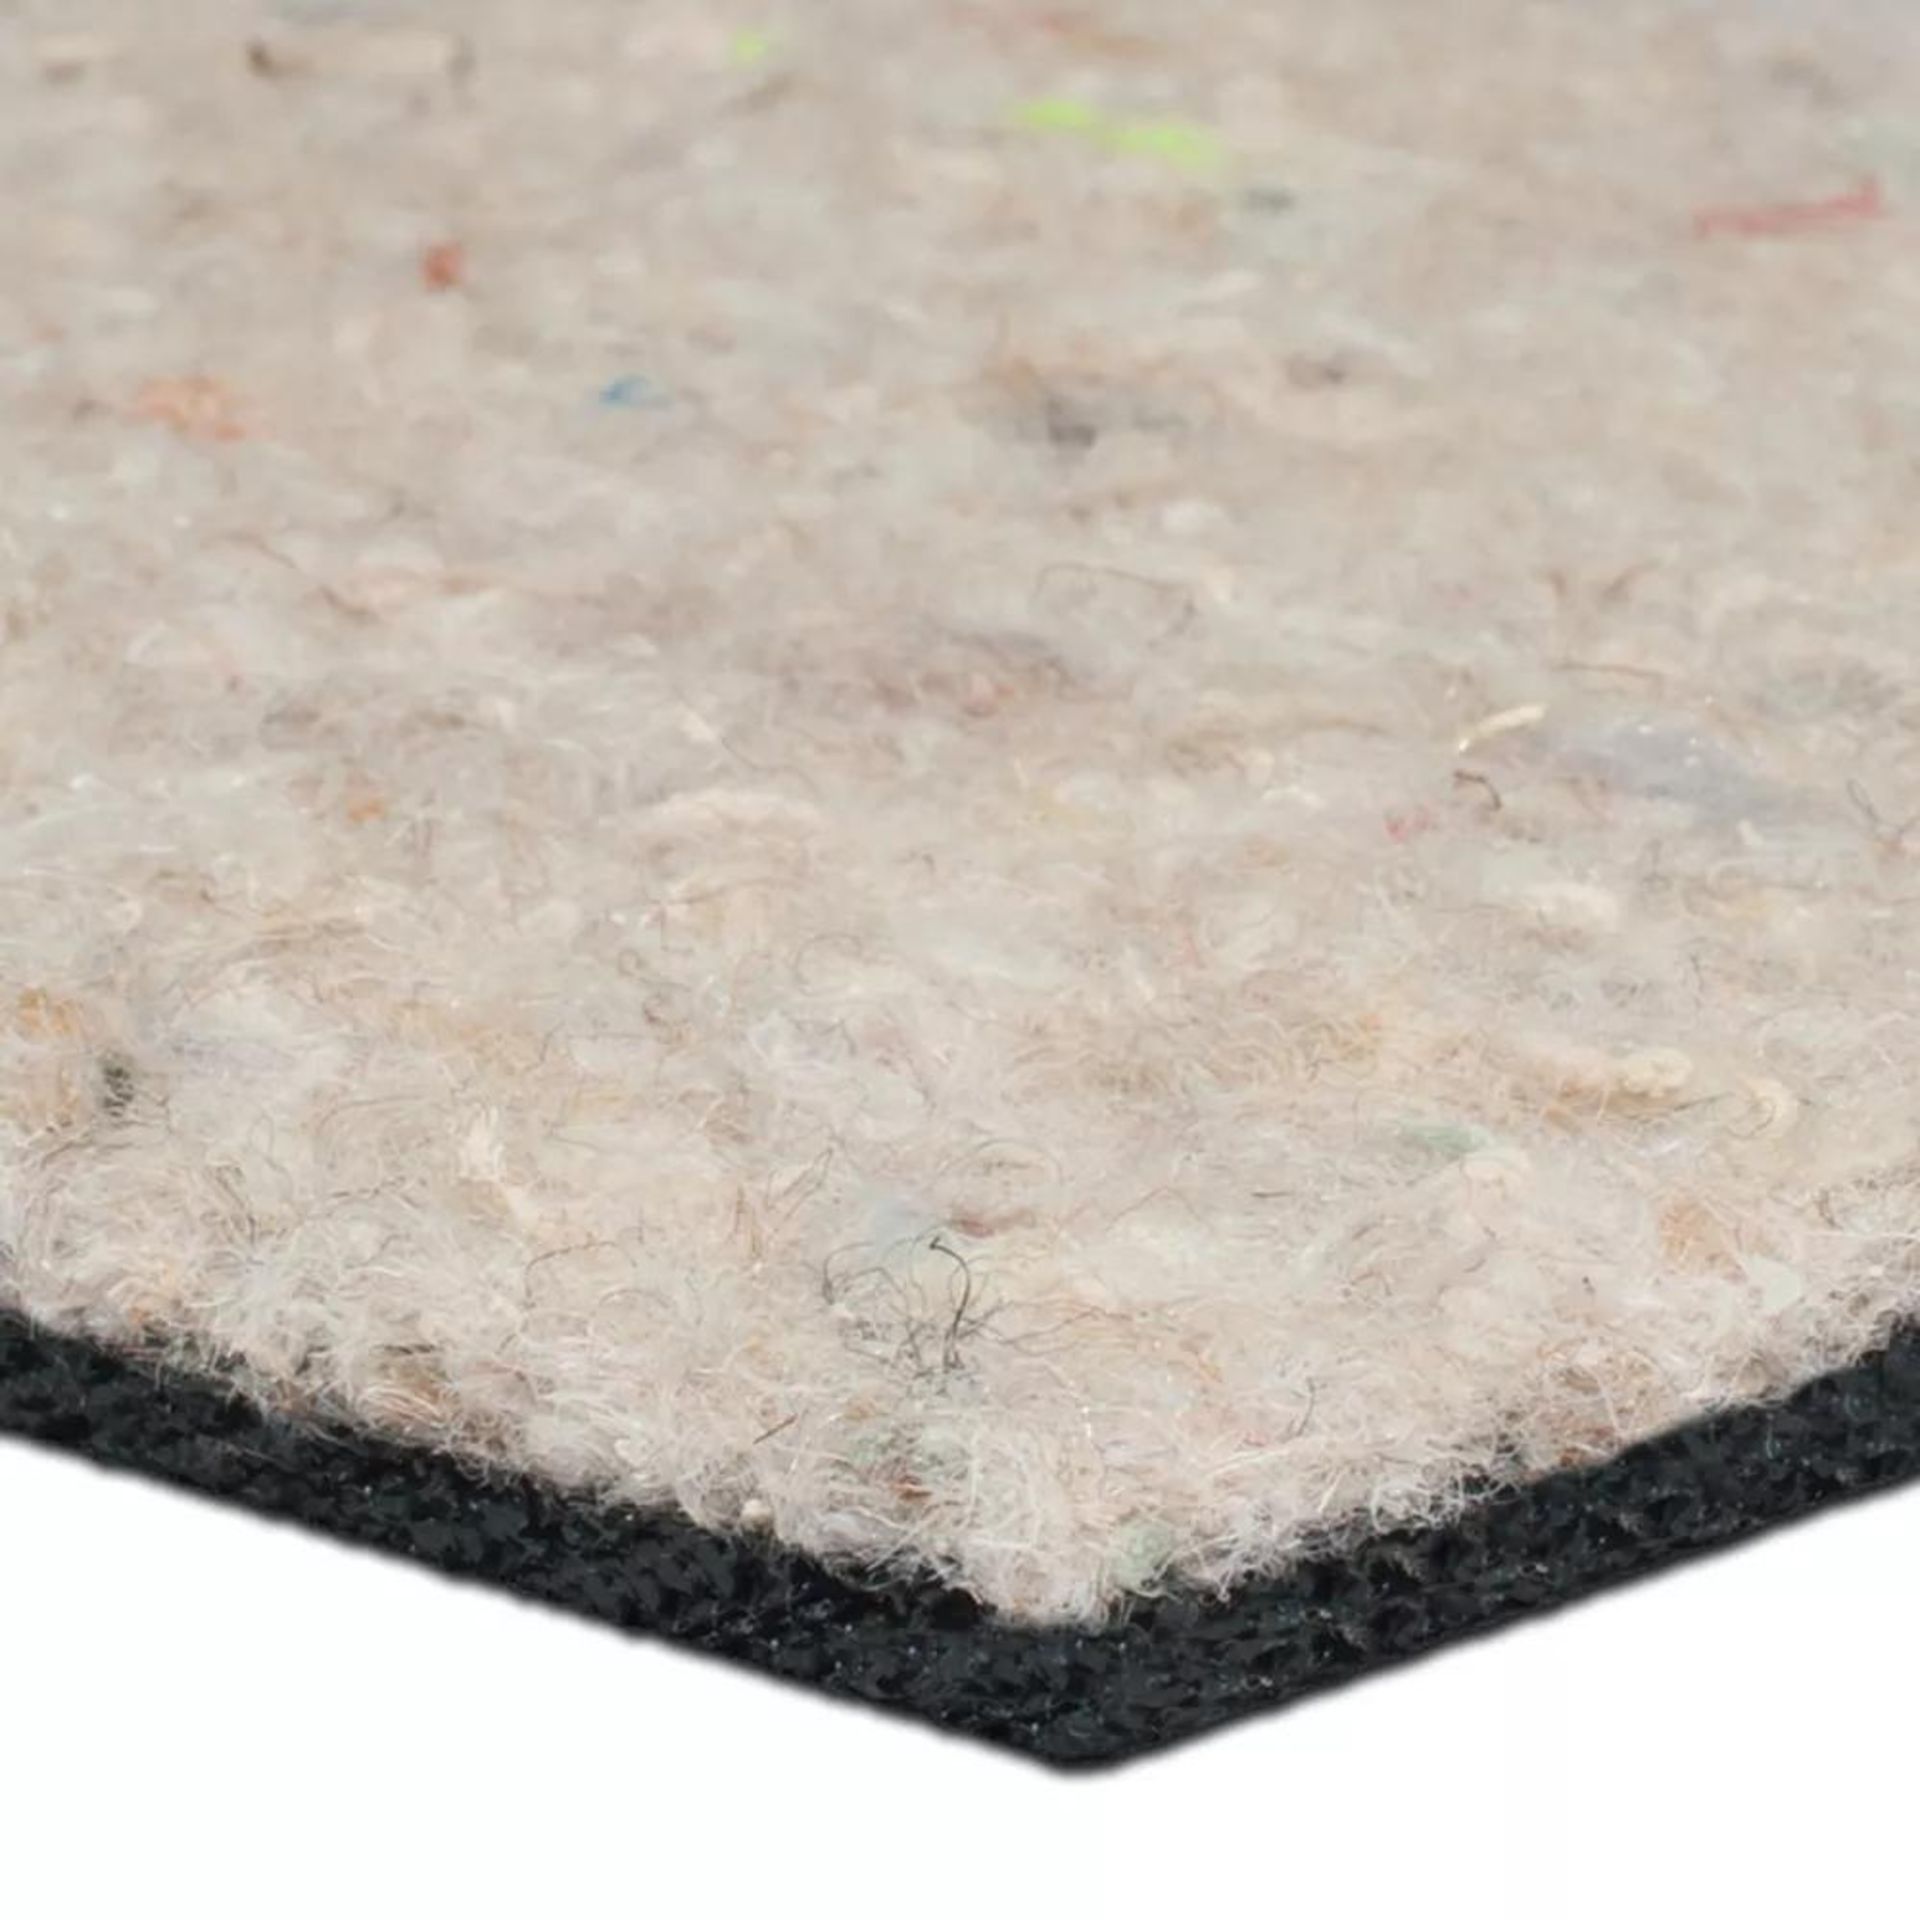 50 sq meters SRS sound reduction carpet underlay - Image 3 of 3